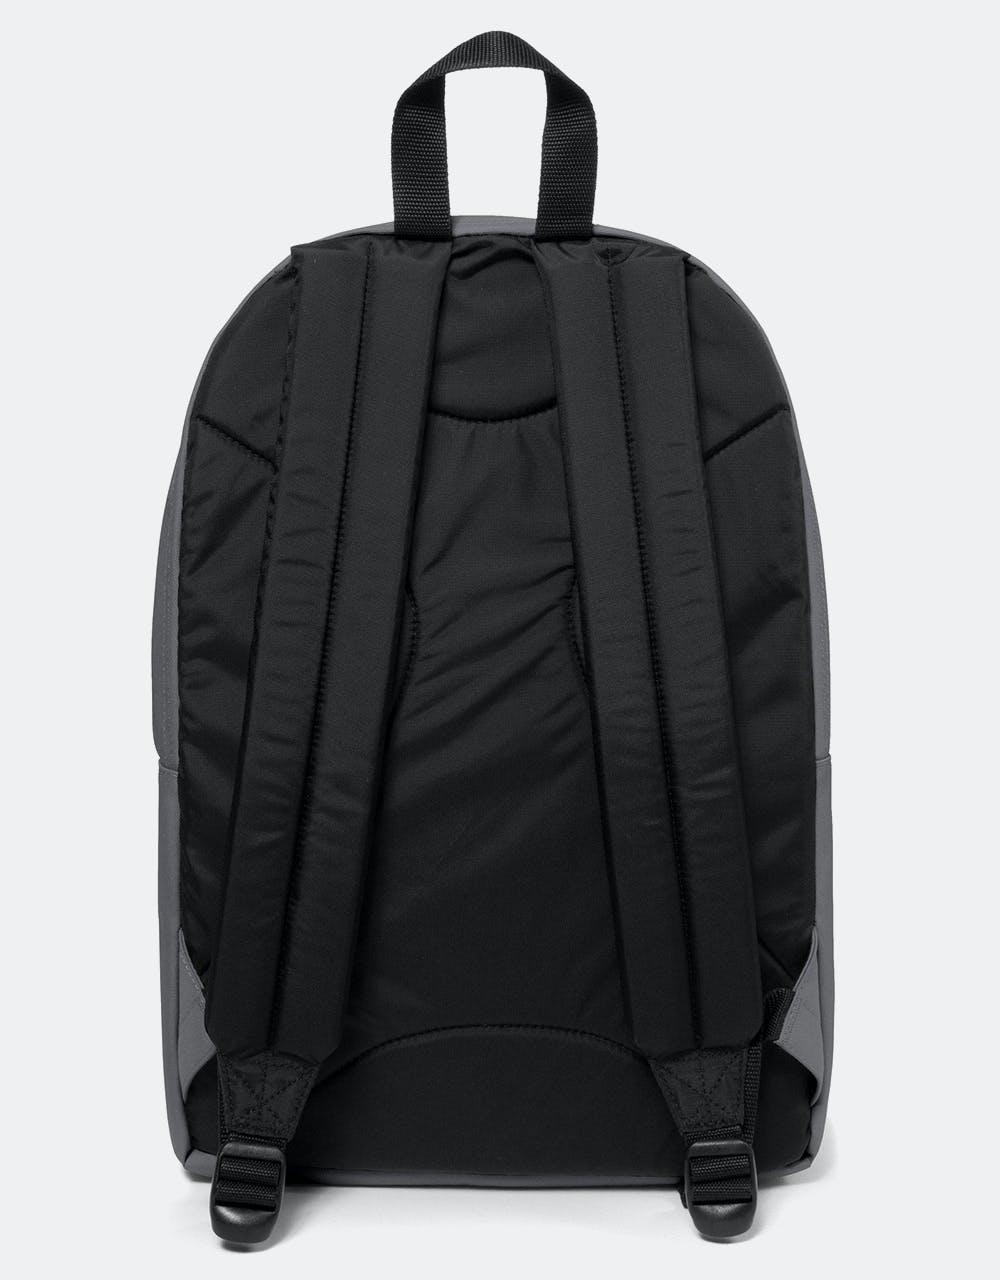 Eastpak Back To Work Backpack - Woven Grey